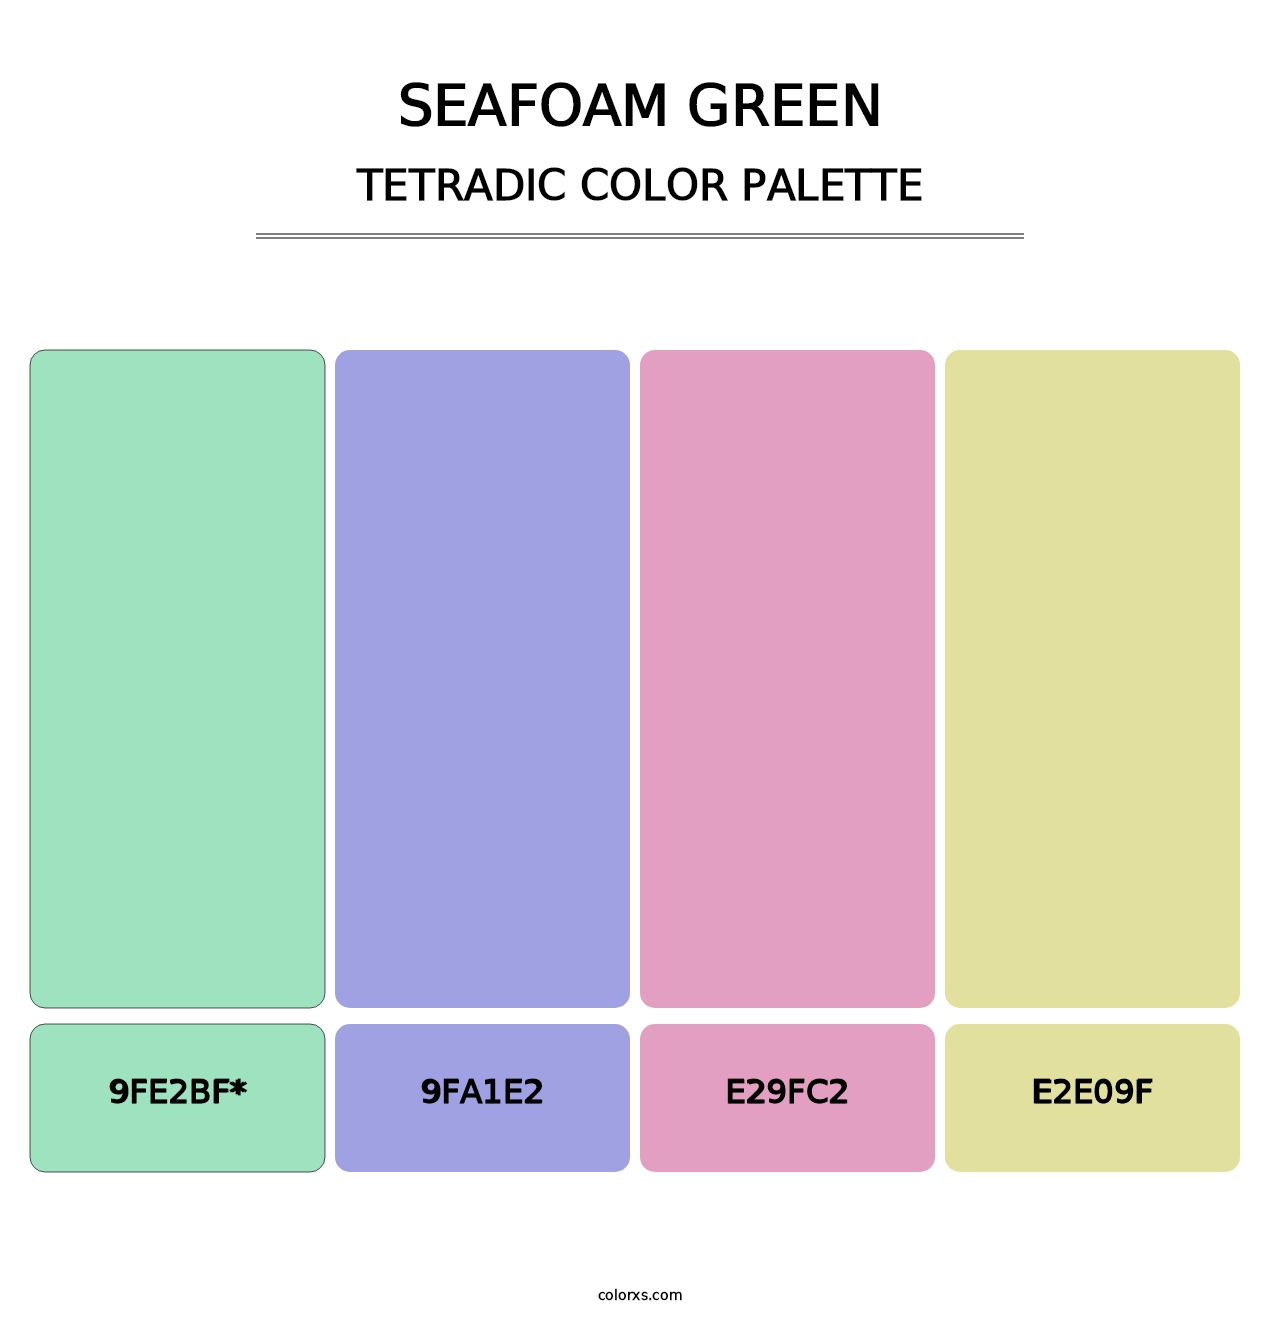 Seafoam Green - Tetradic Color Palette